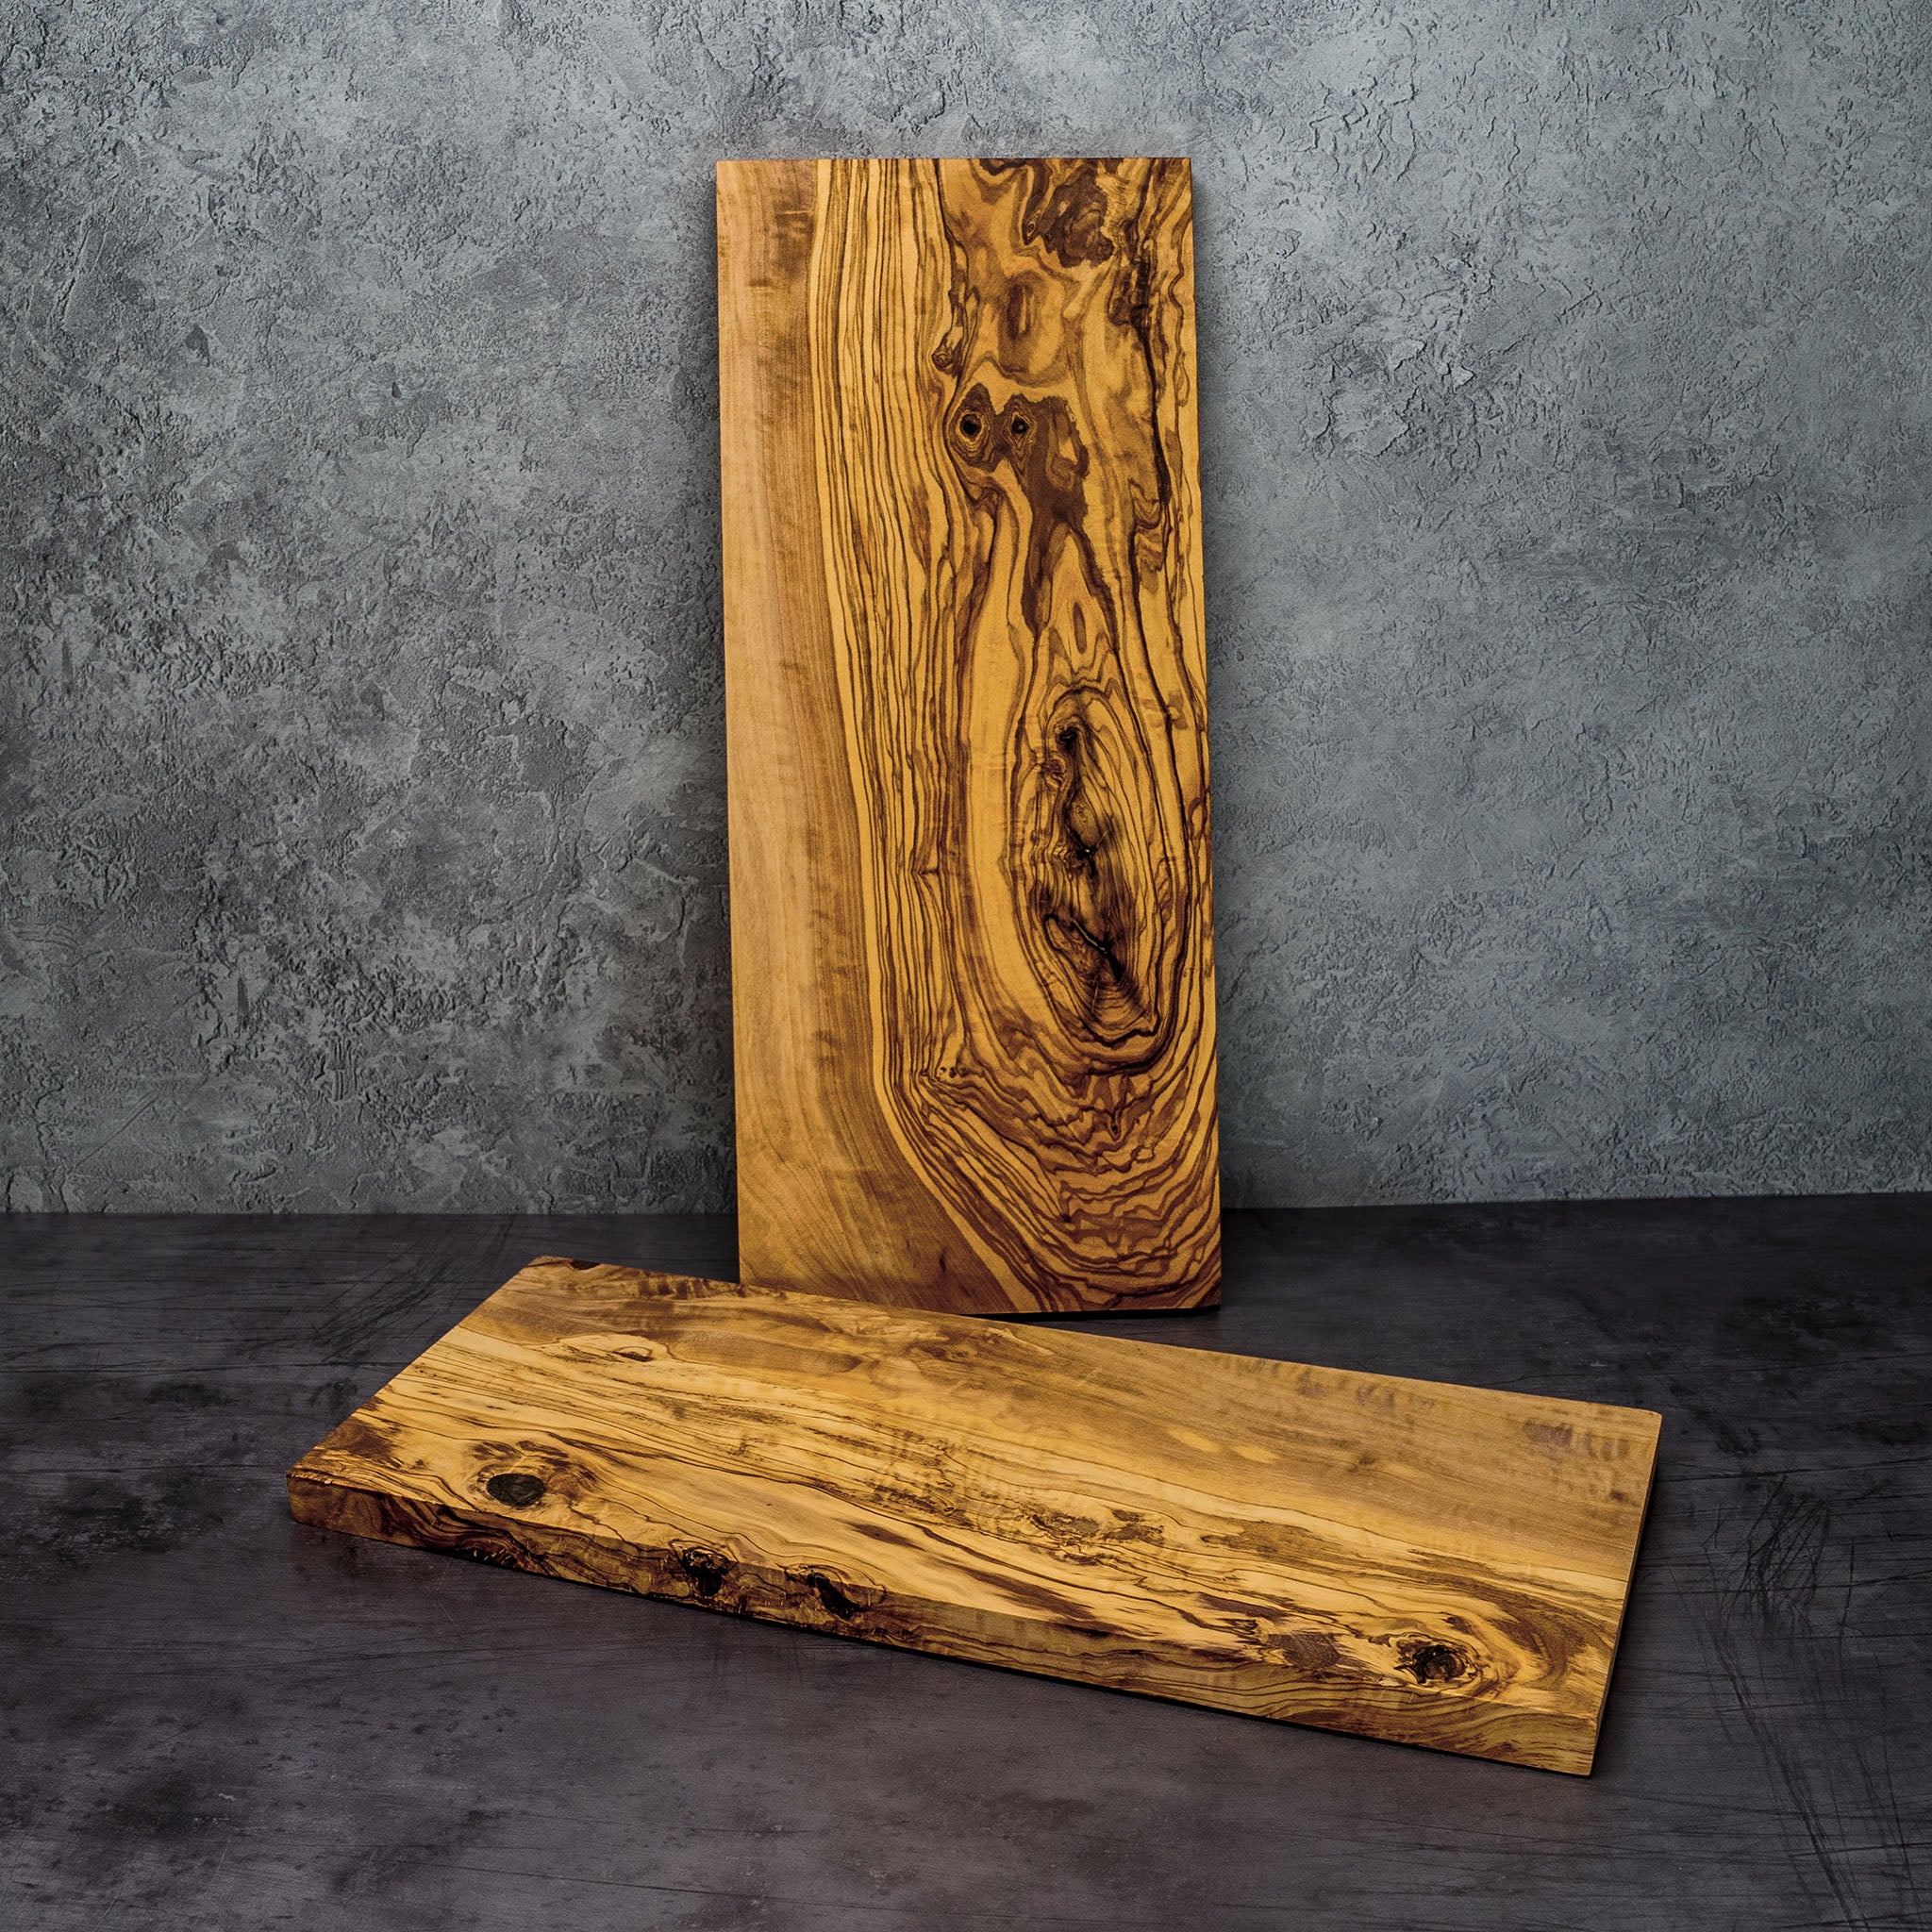 Rectangular Olive Wood Cheese Board